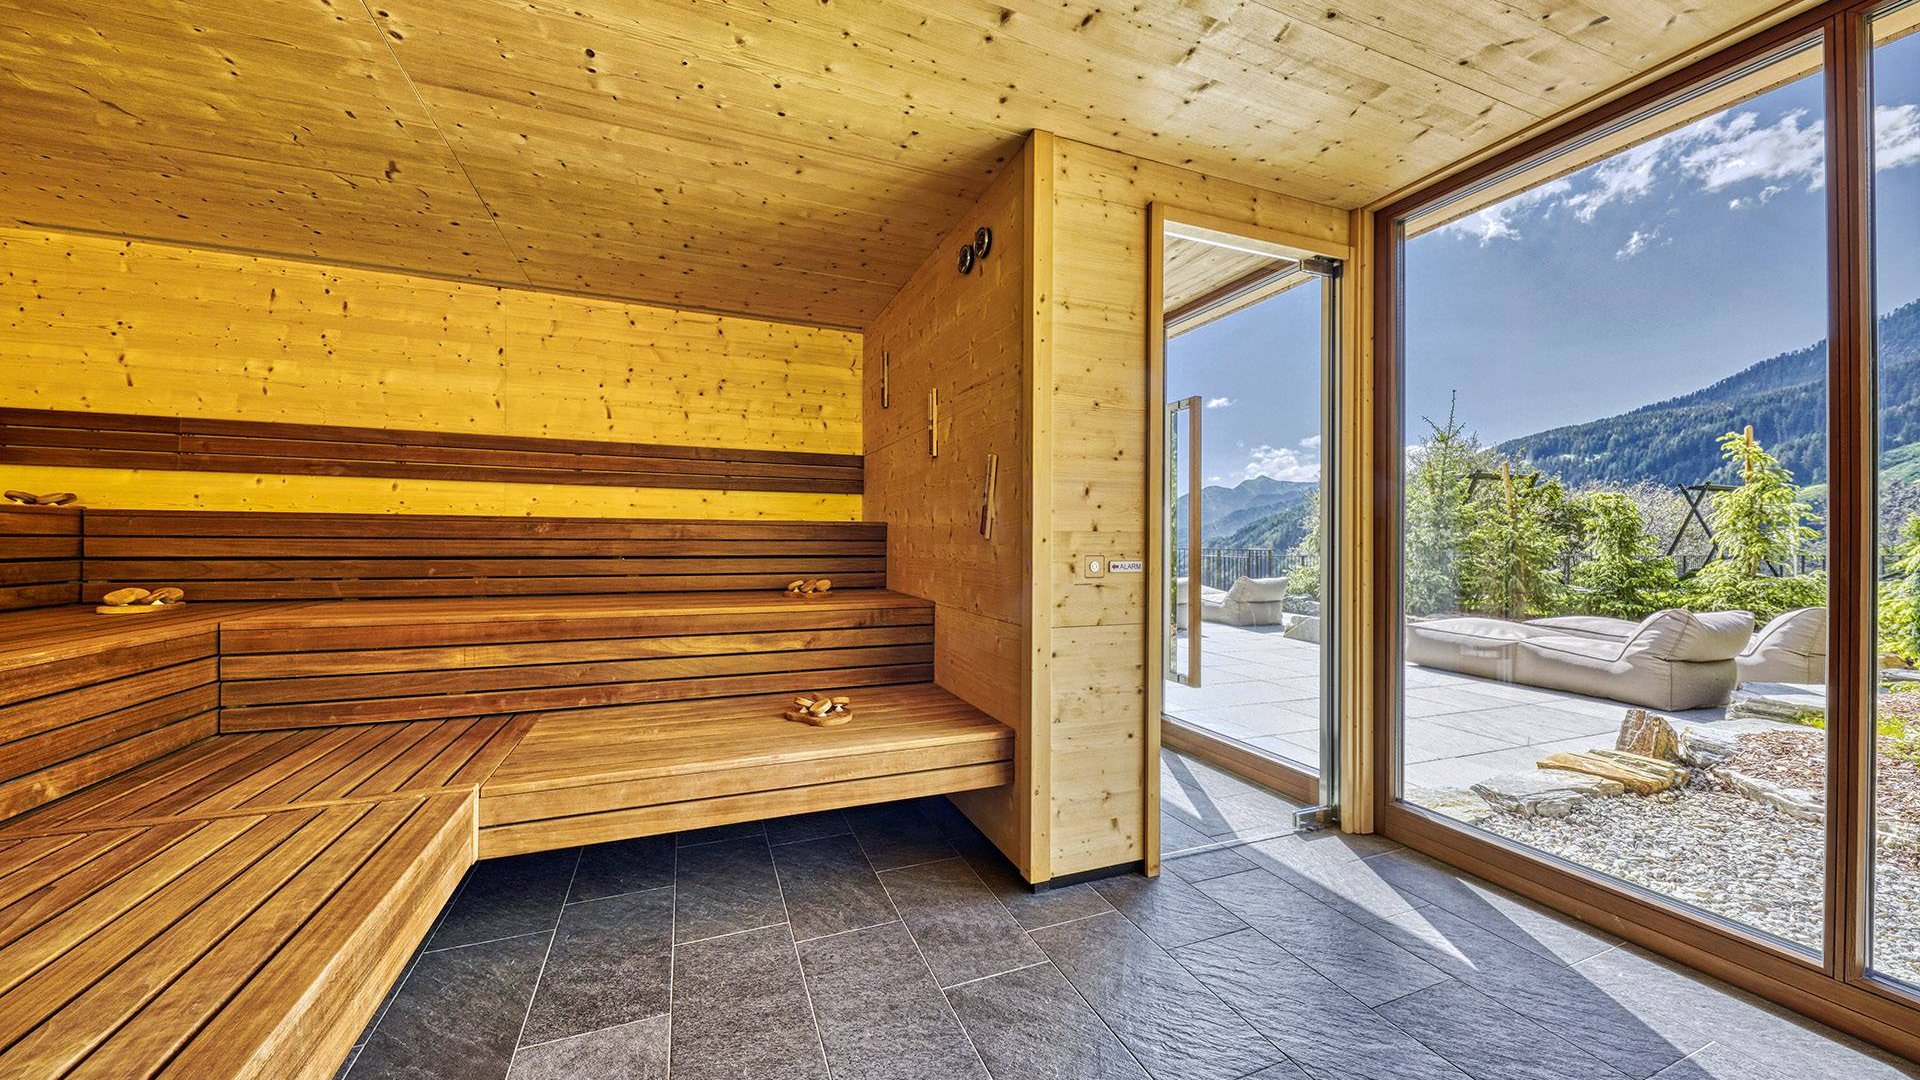 Our sauna realm